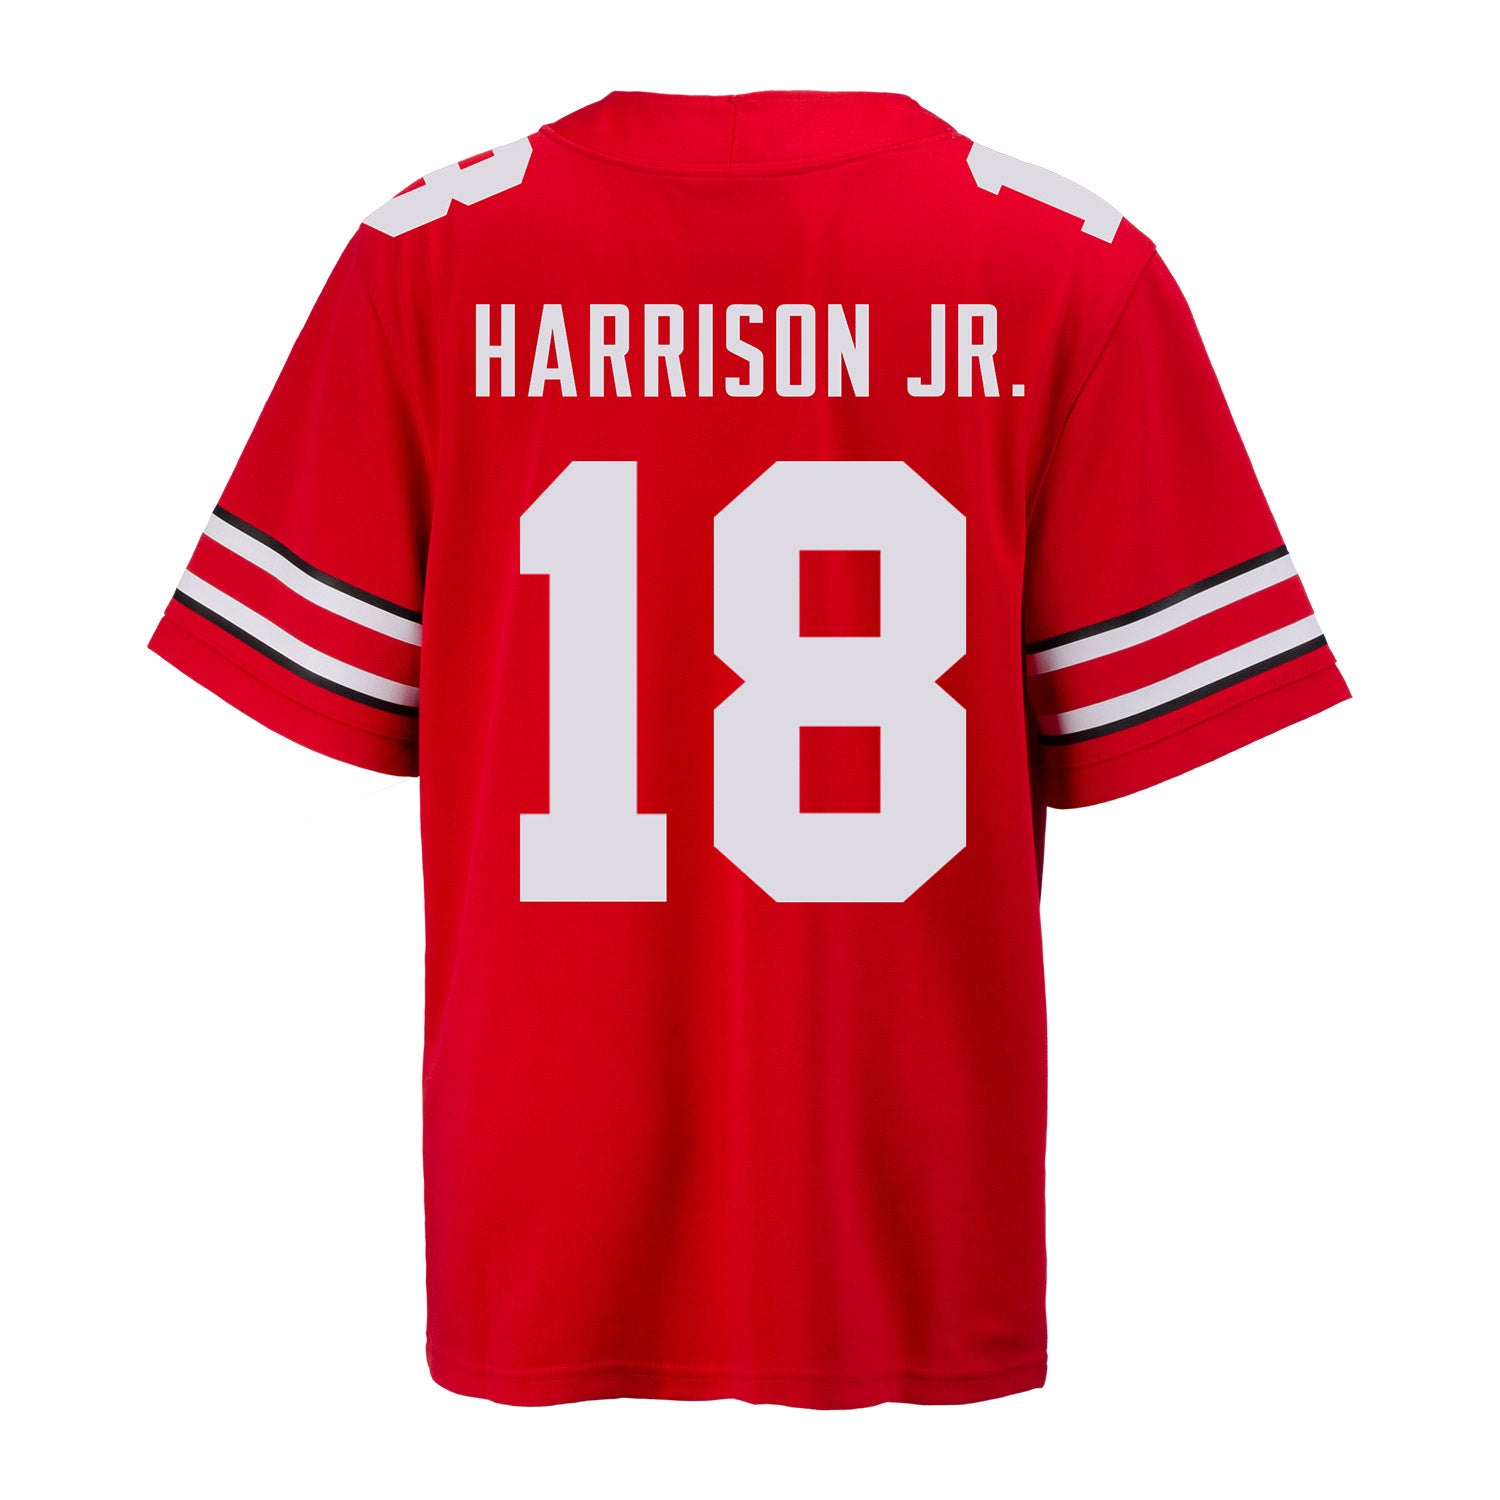 Ohio State Buckeyes Marvin Harrison jr. Red Jersey